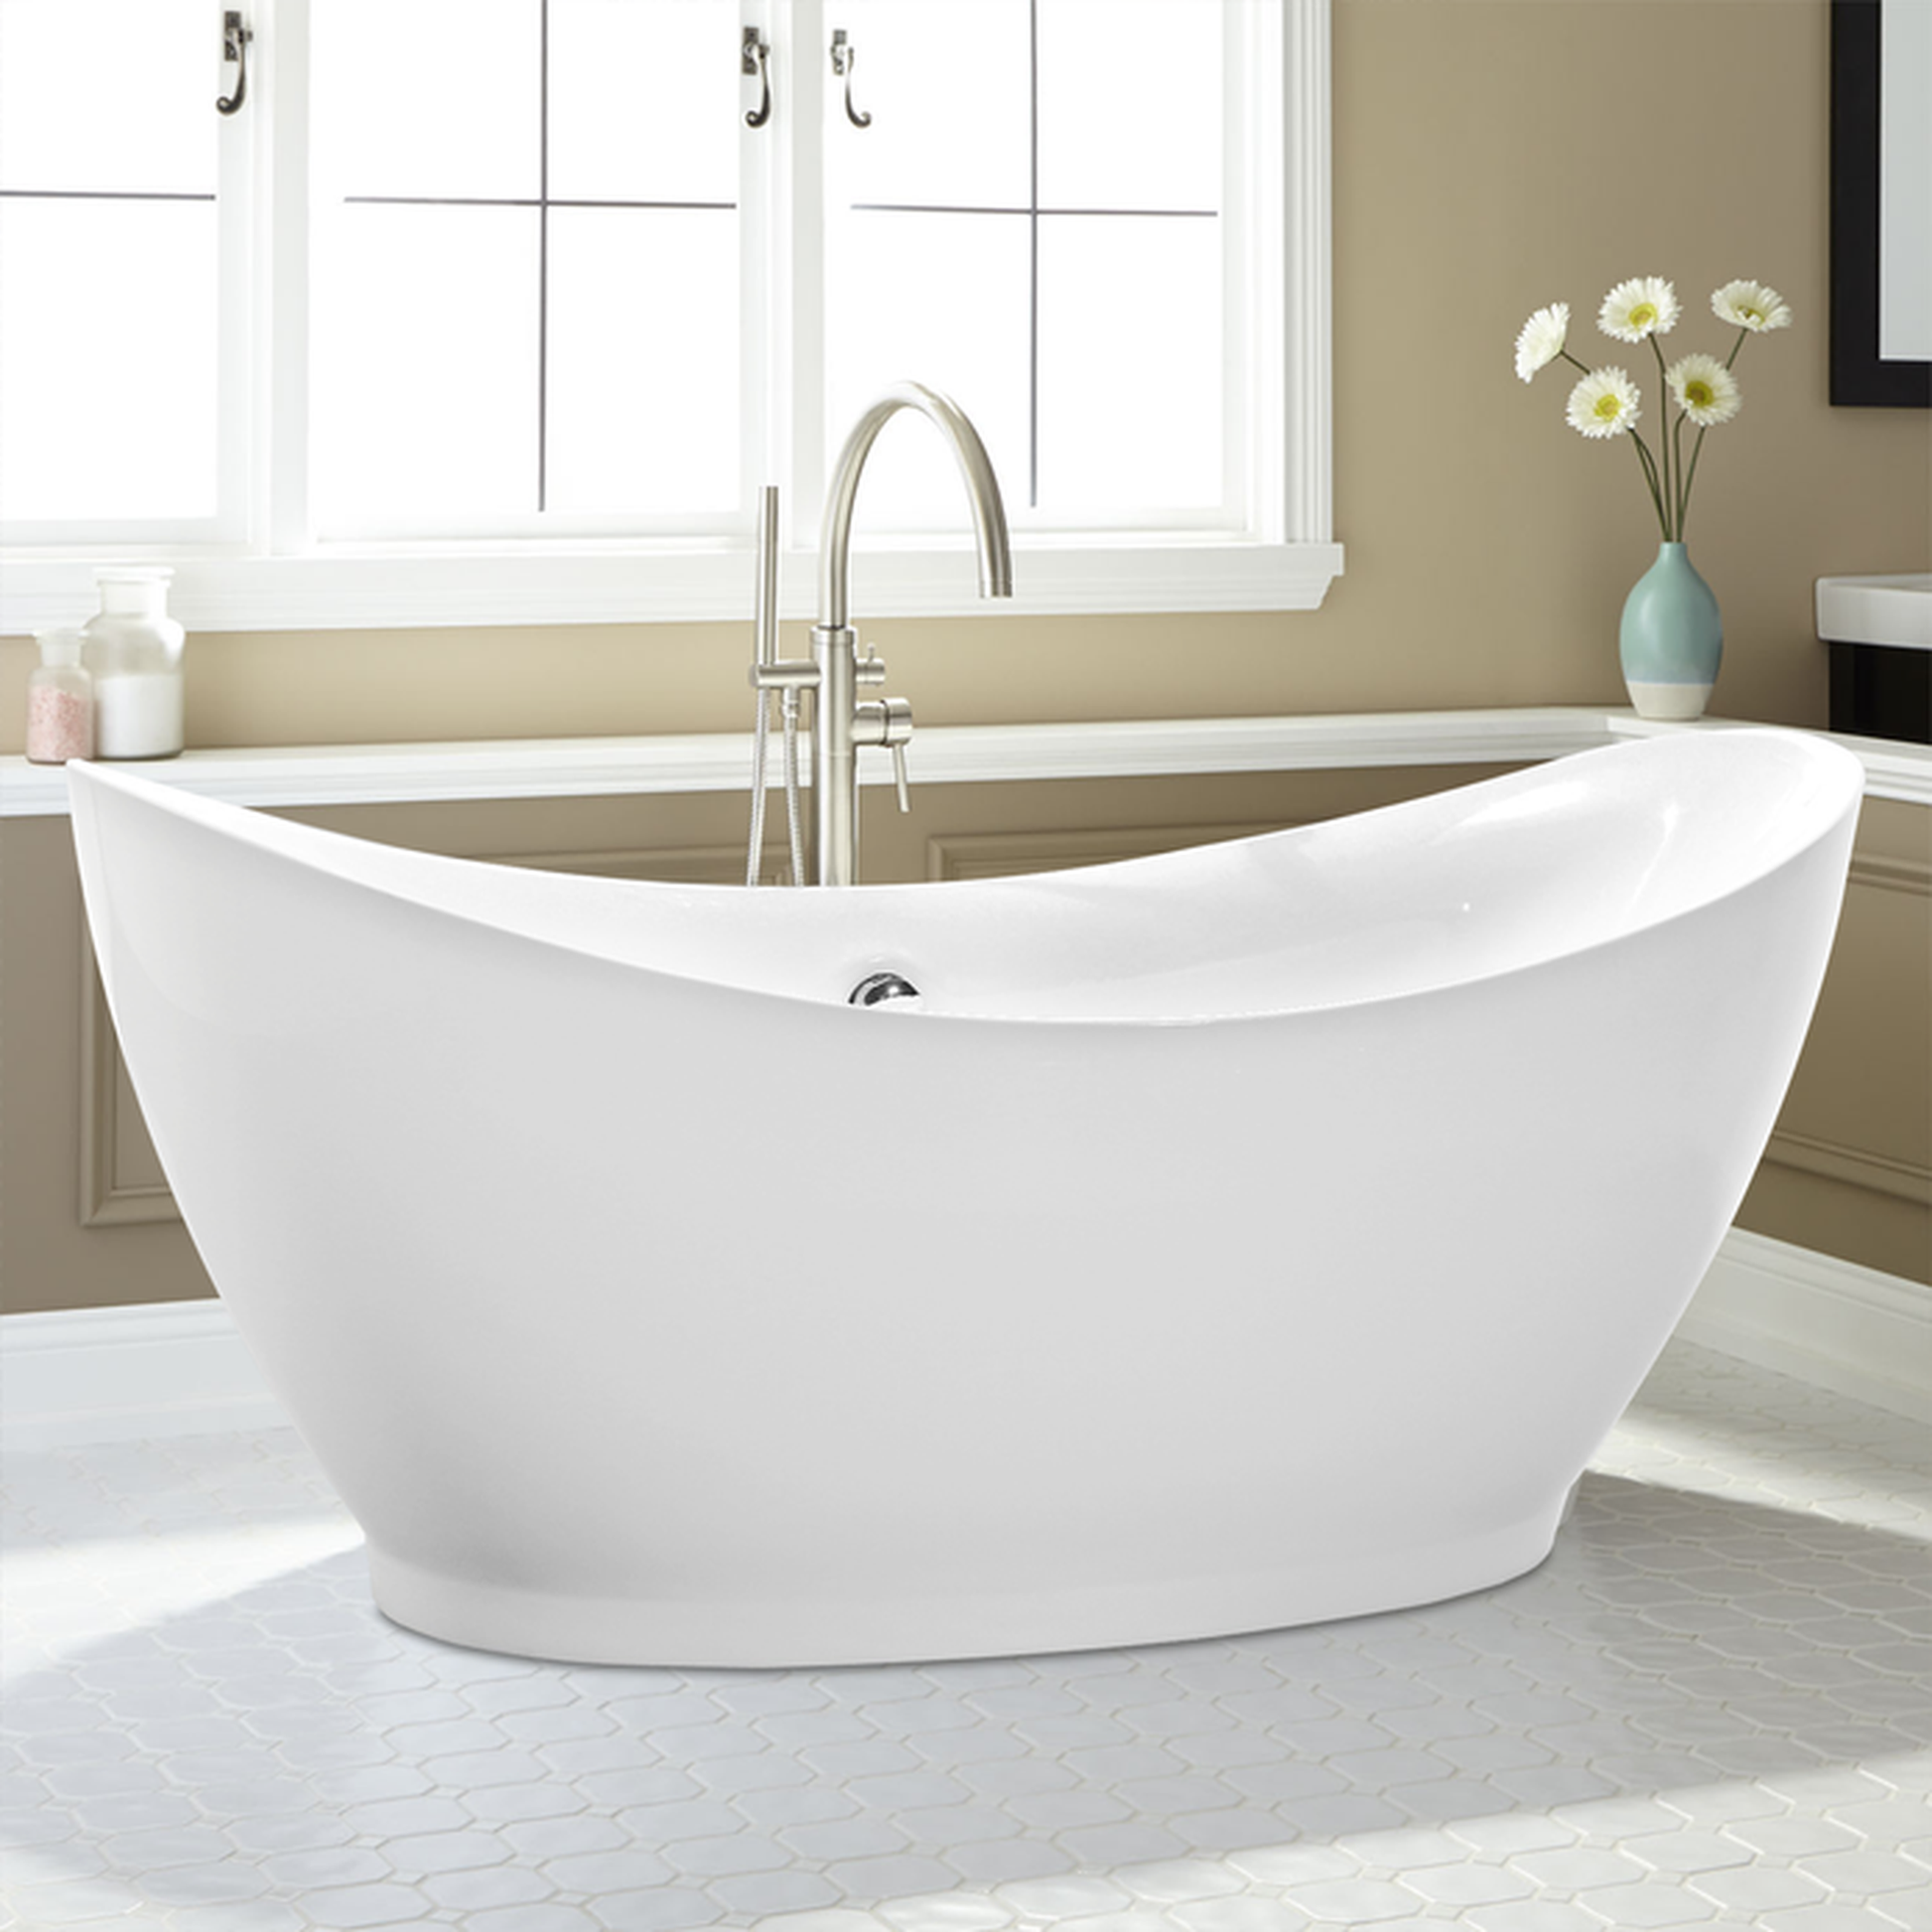 Vanity Art 68" W x 30" H White Acrylic Freestanding Bathtub With Polished Chrome Pop-up Drain and Flexible Drain Hose